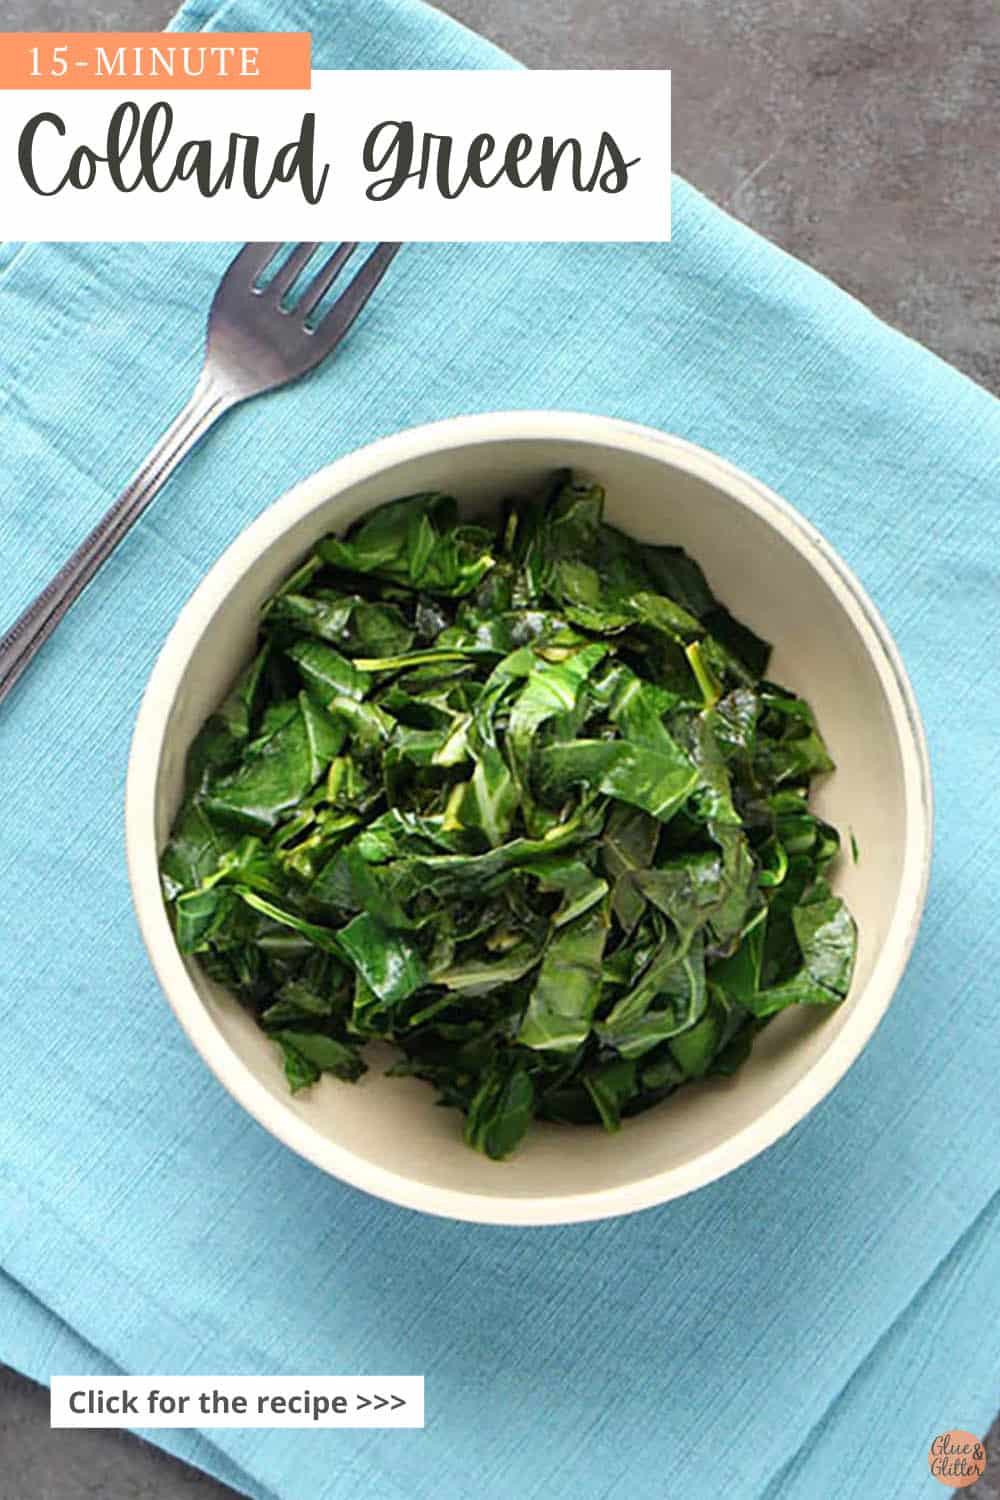 bowl of vegan stovetop collard greens on a blue napkin, text overlay